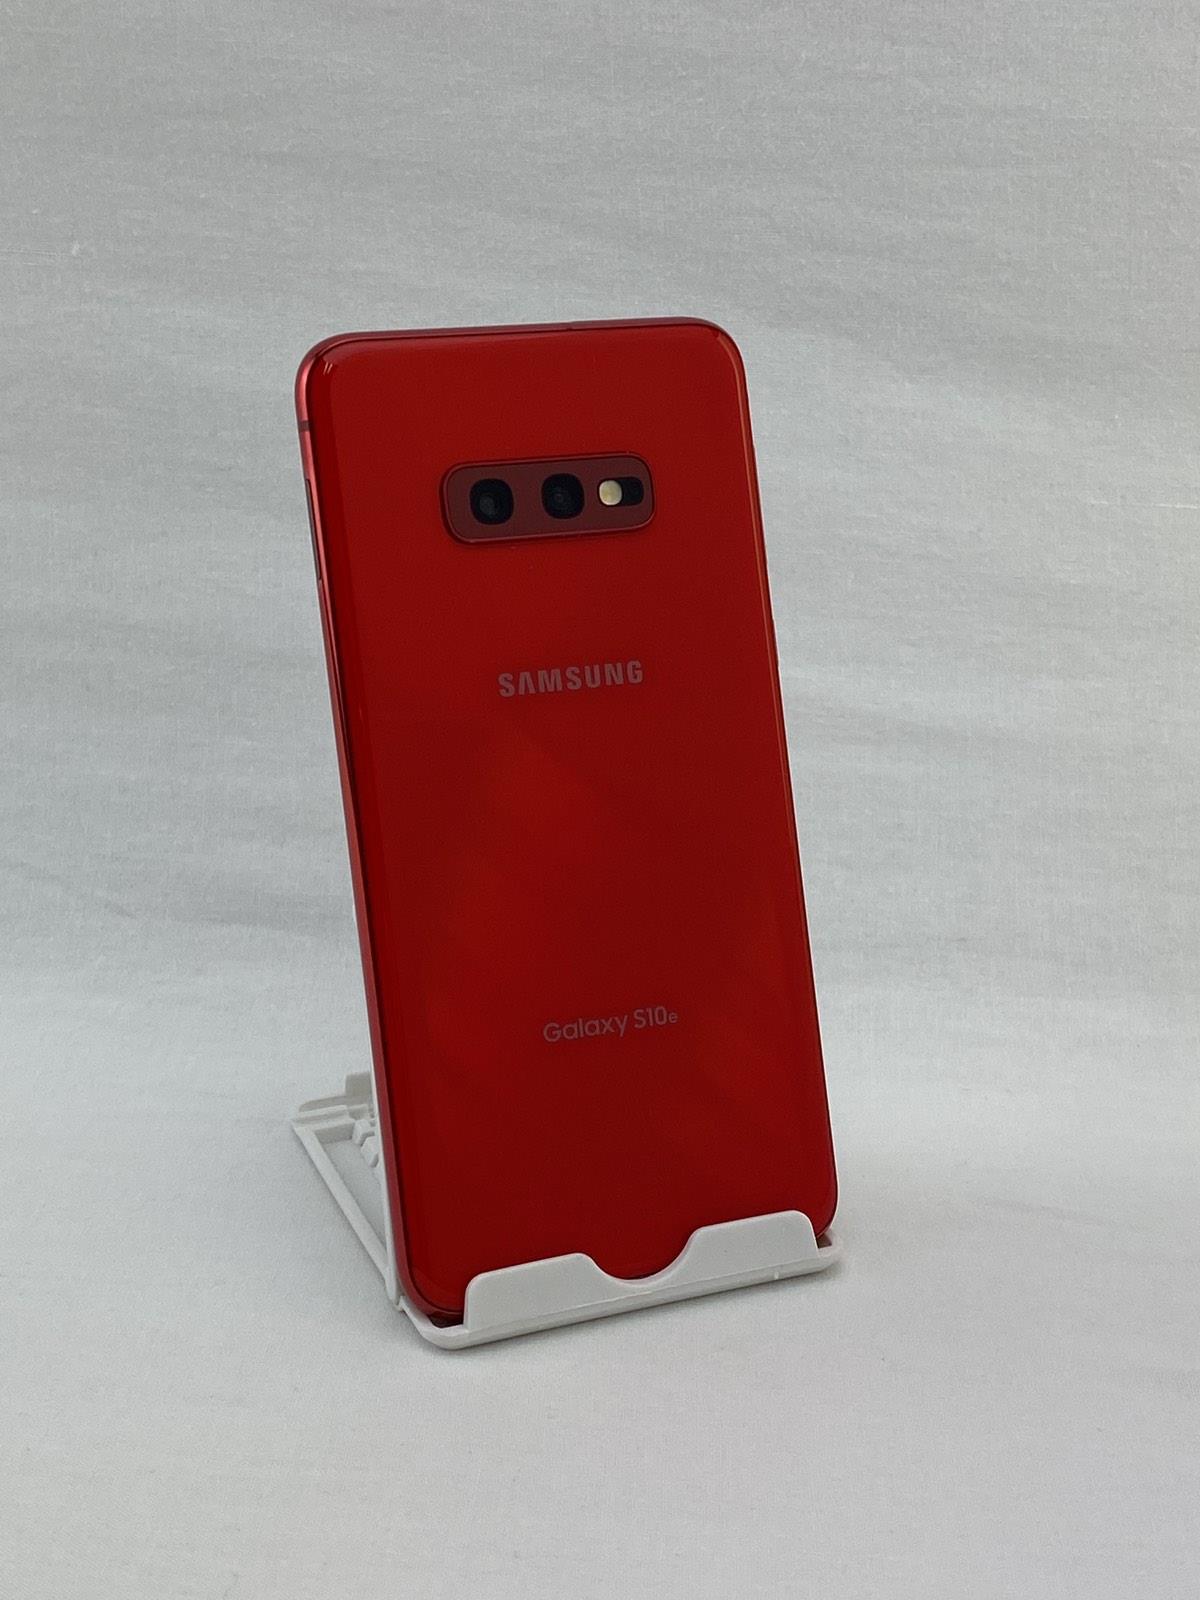 Samsung Galaxy S10e Sm G970u 128gb Cardinal Red Verizongsm Free Delivery Ebay